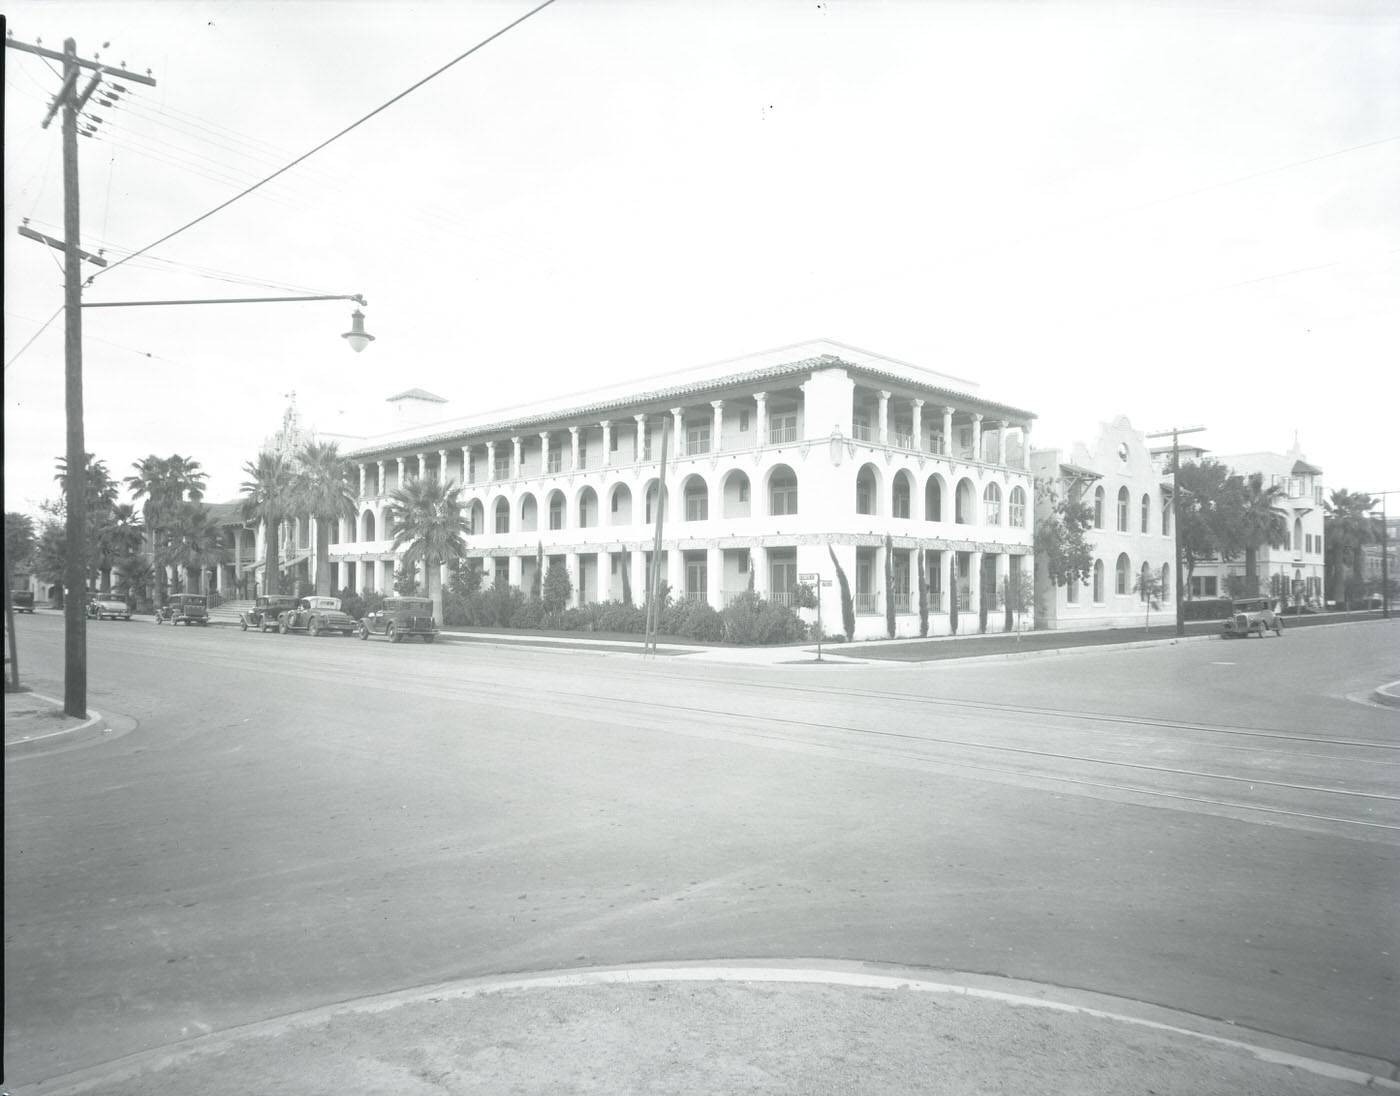 St. Joseph's Hospital Exterior, 1930s